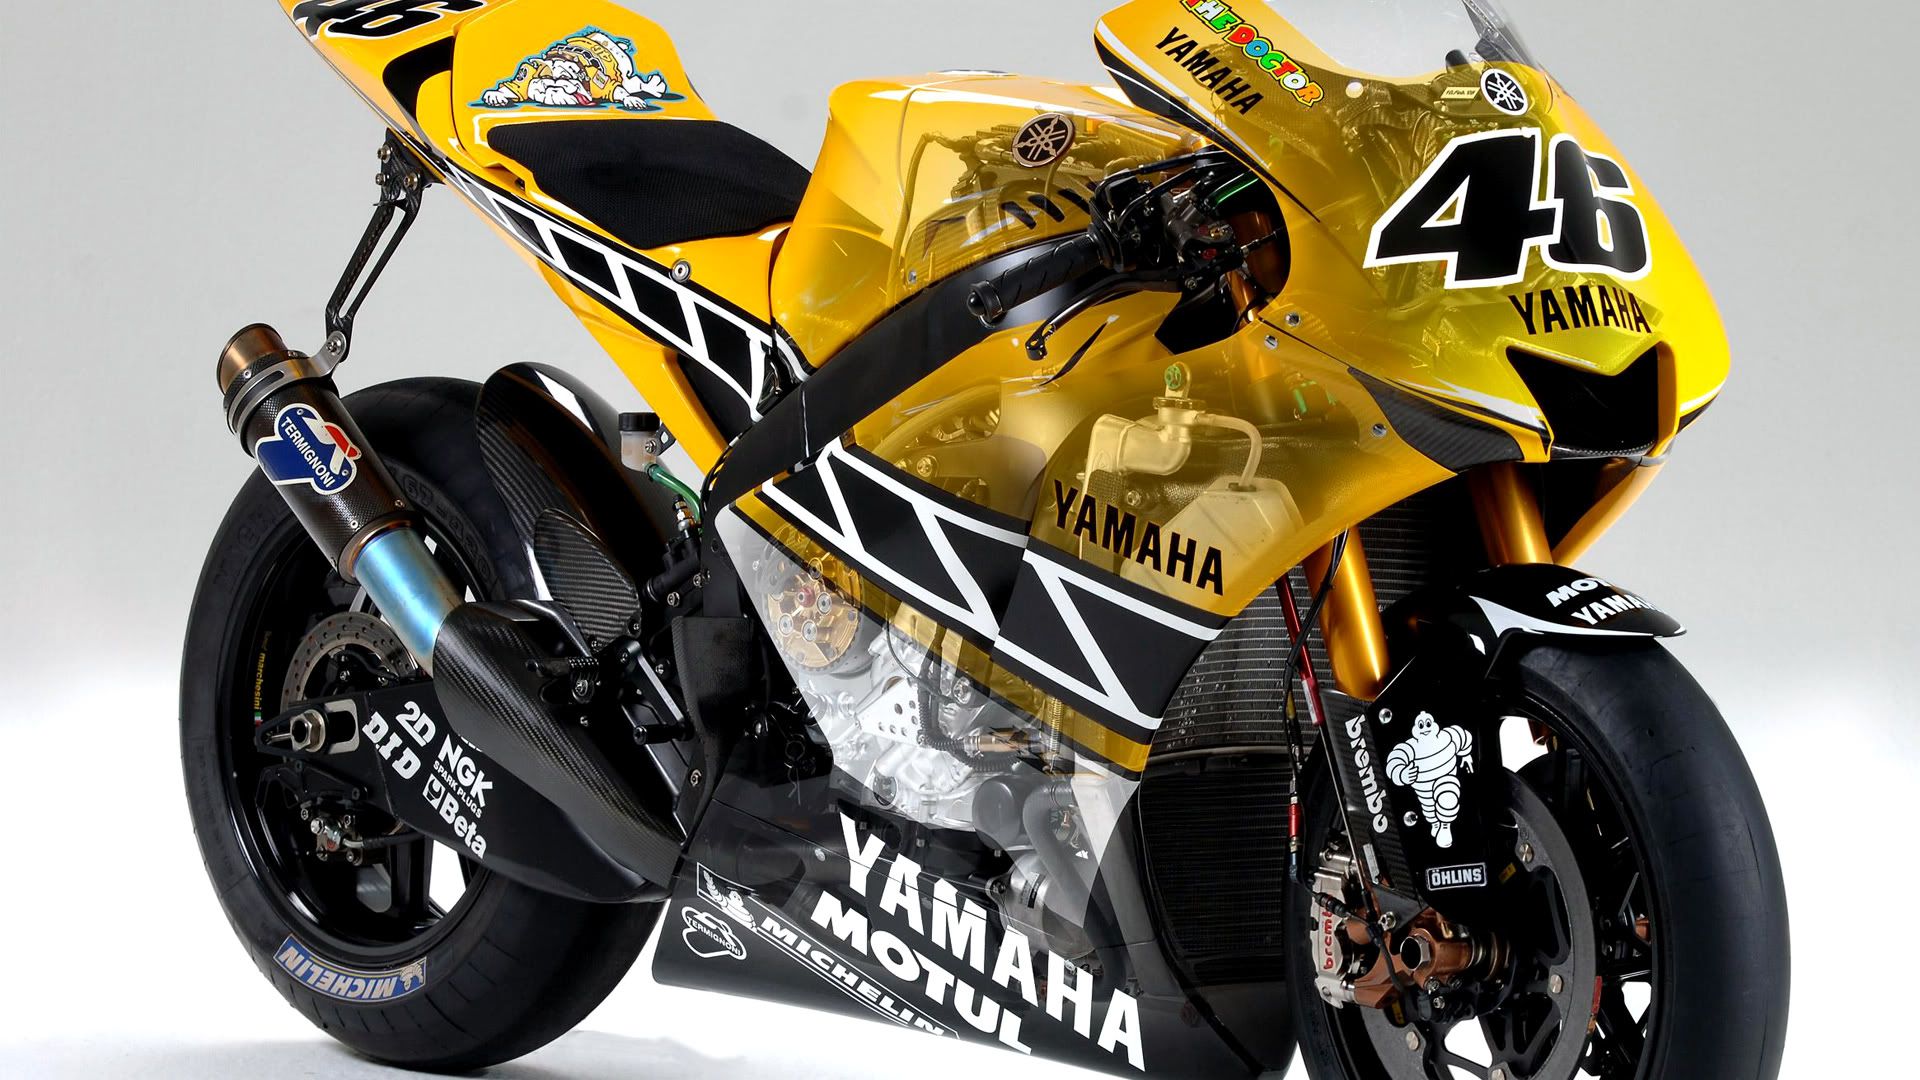 Yamaha Motogp Bikes - HD Wallpaper 